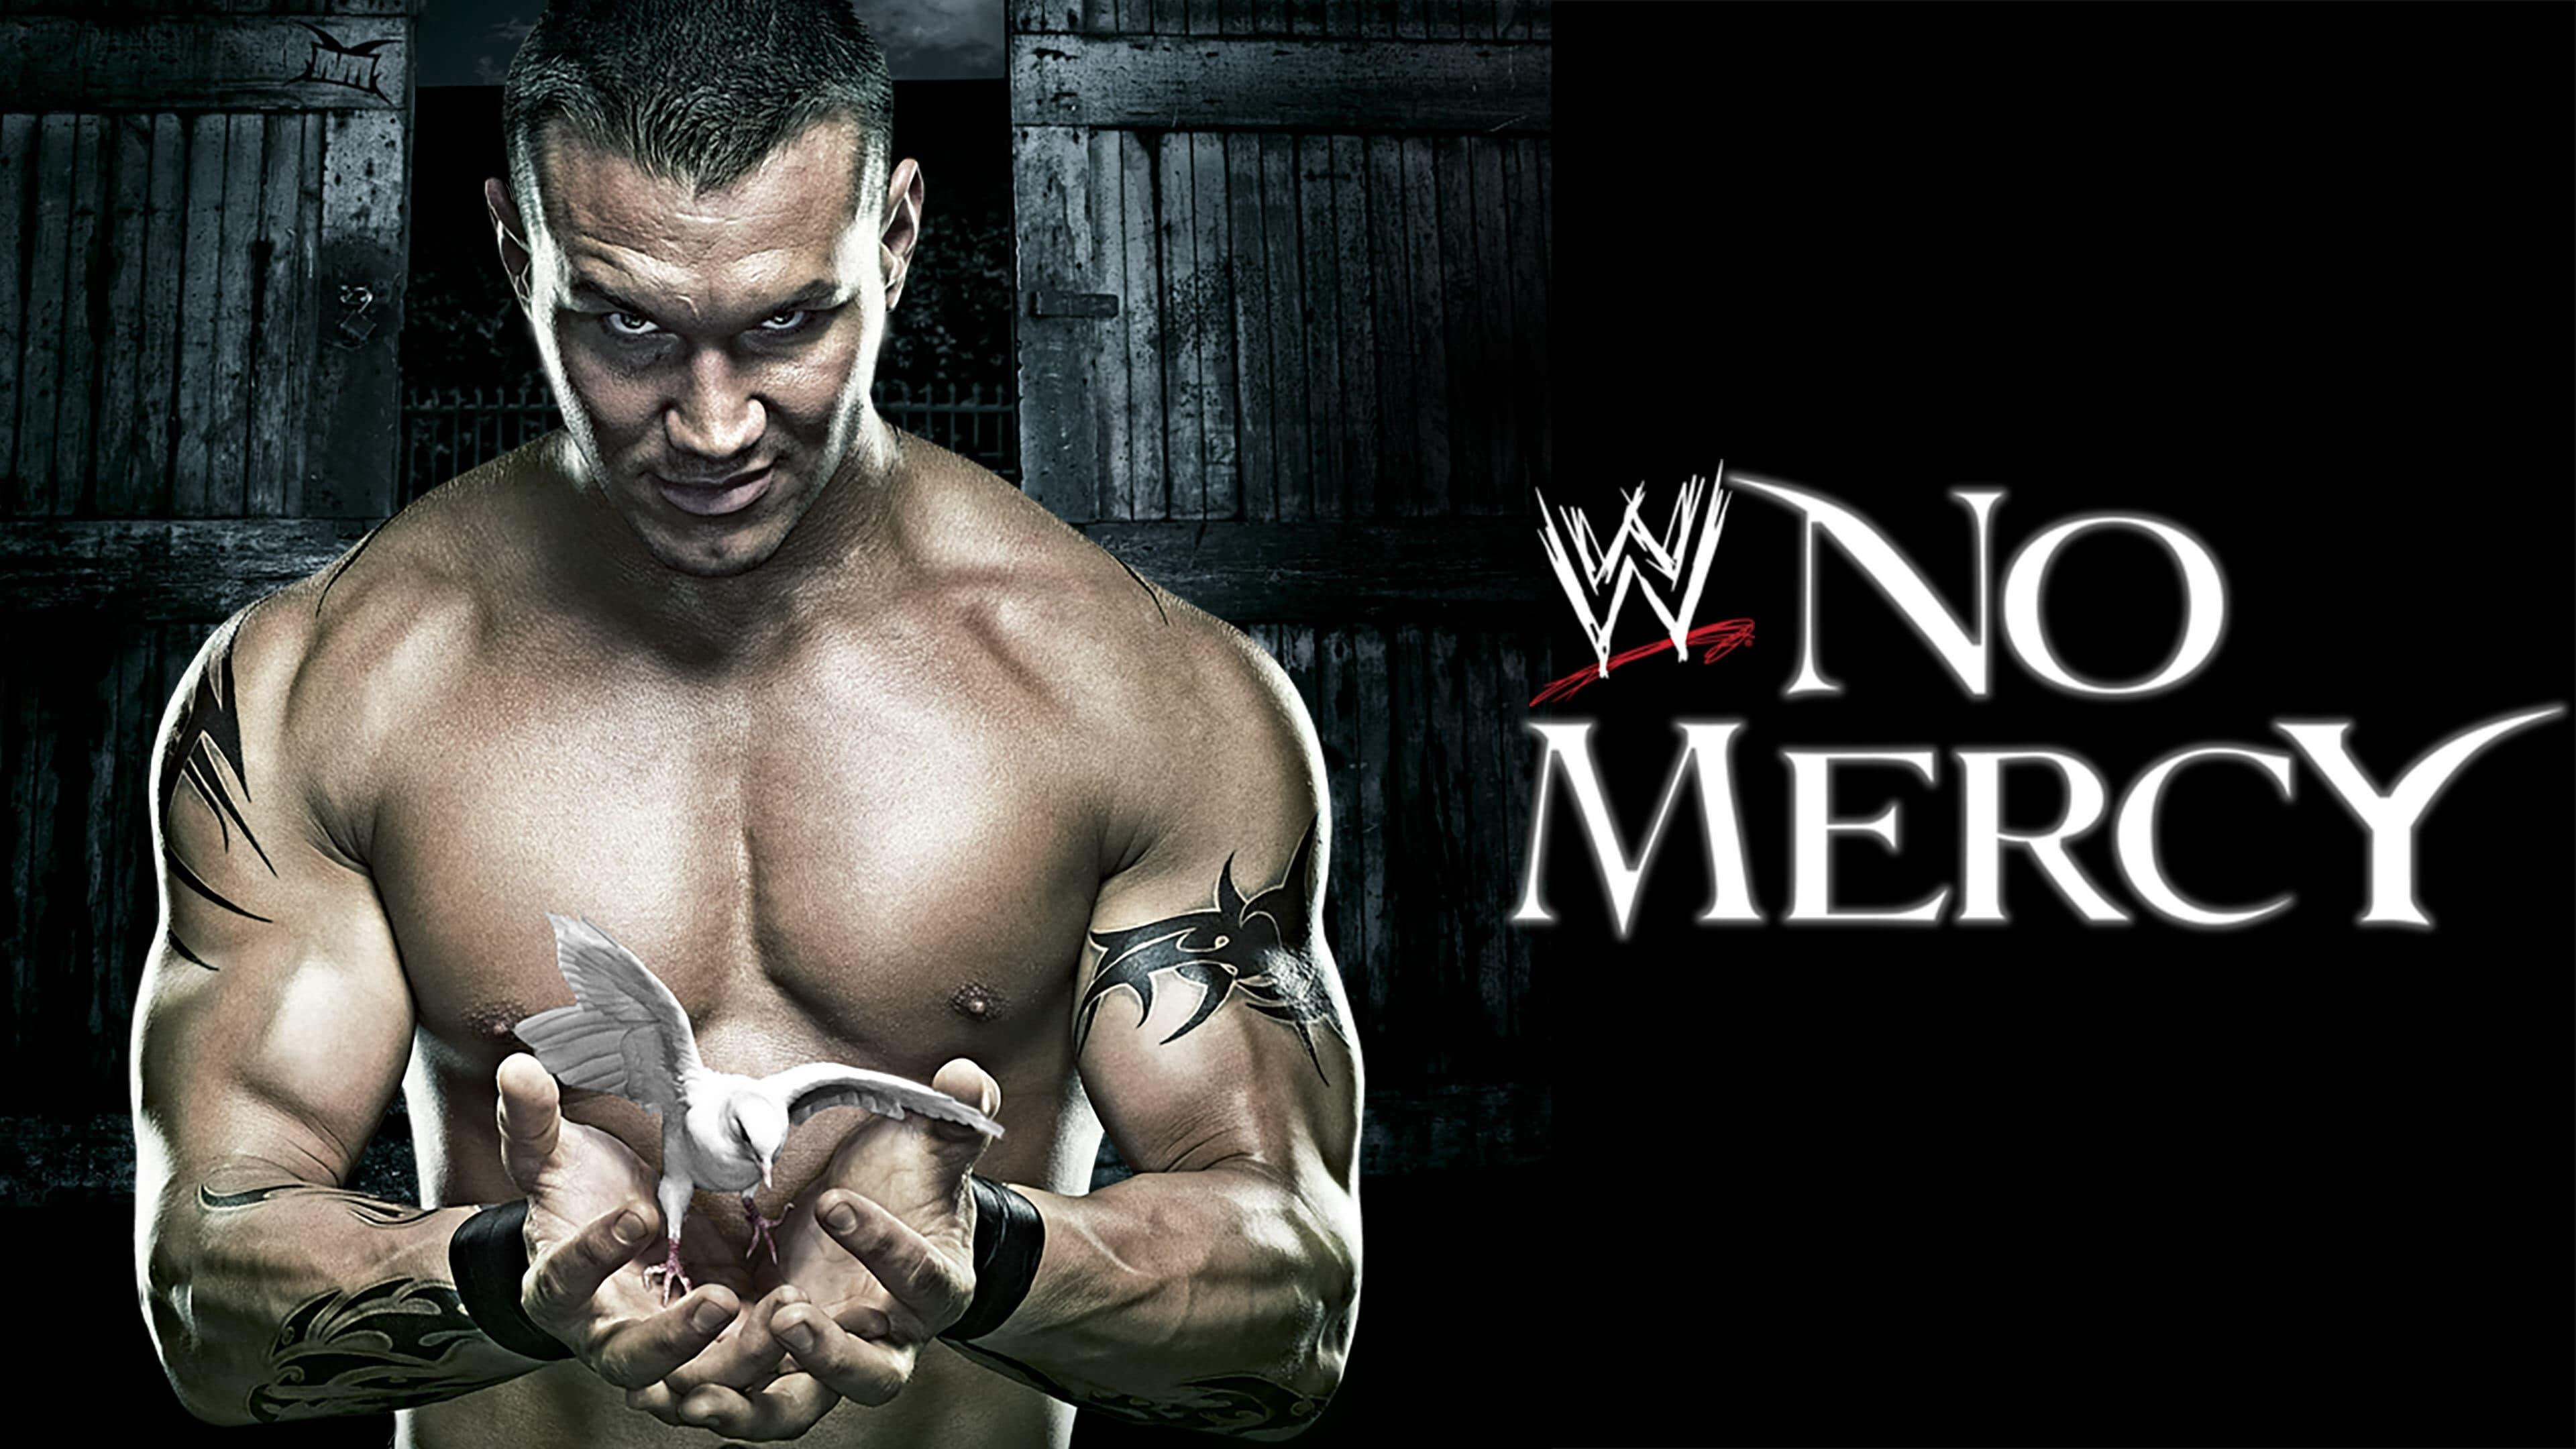 WWE No Mercy 2007 backdrop